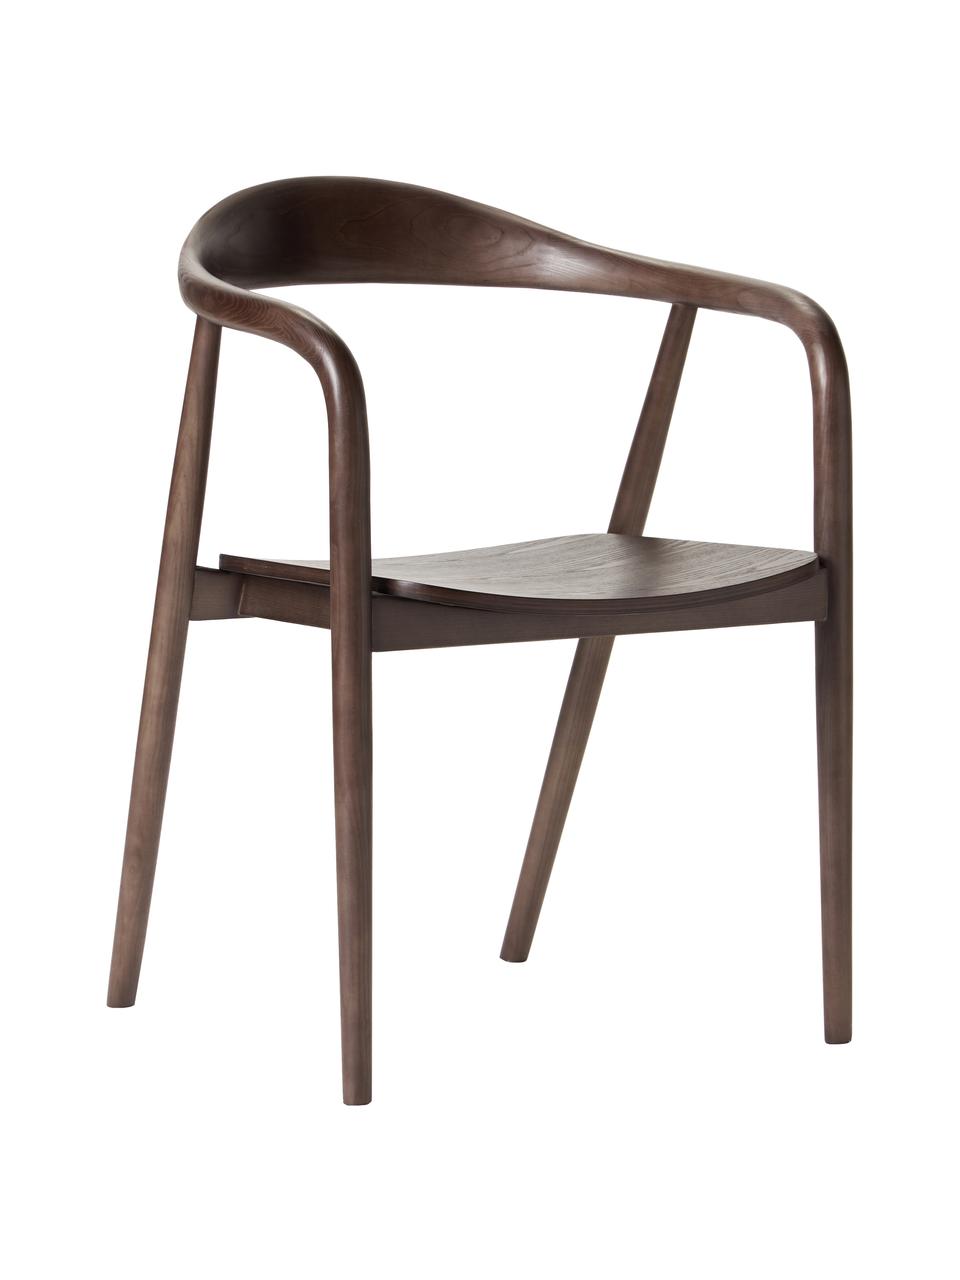 Houten fauteuil Angelina, Essenhout, FSC-gecertificeerd, gelakt, multiplex, FSC-gecertificeerd, Walnoothoutfineer, B 57 x H 80 cm